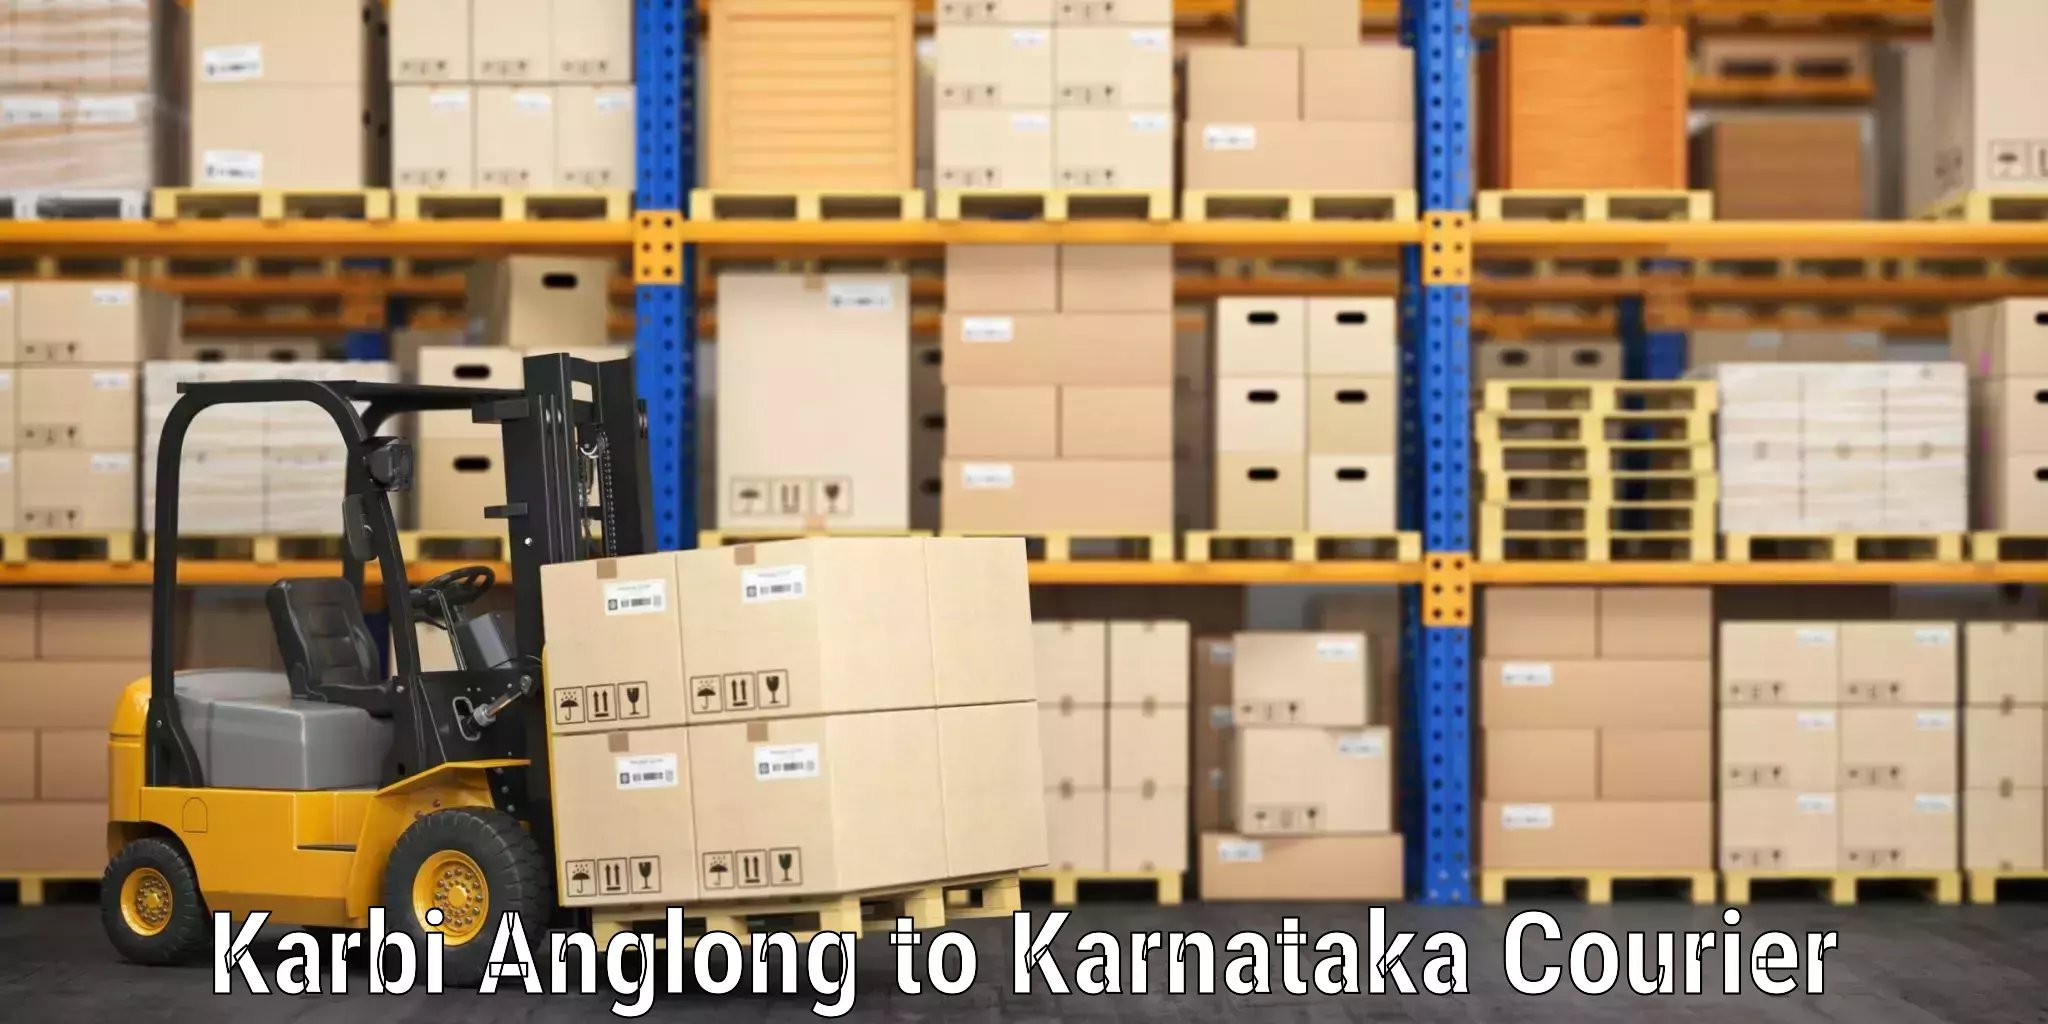 Baggage shipping experts Karbi Anglong to Magadi